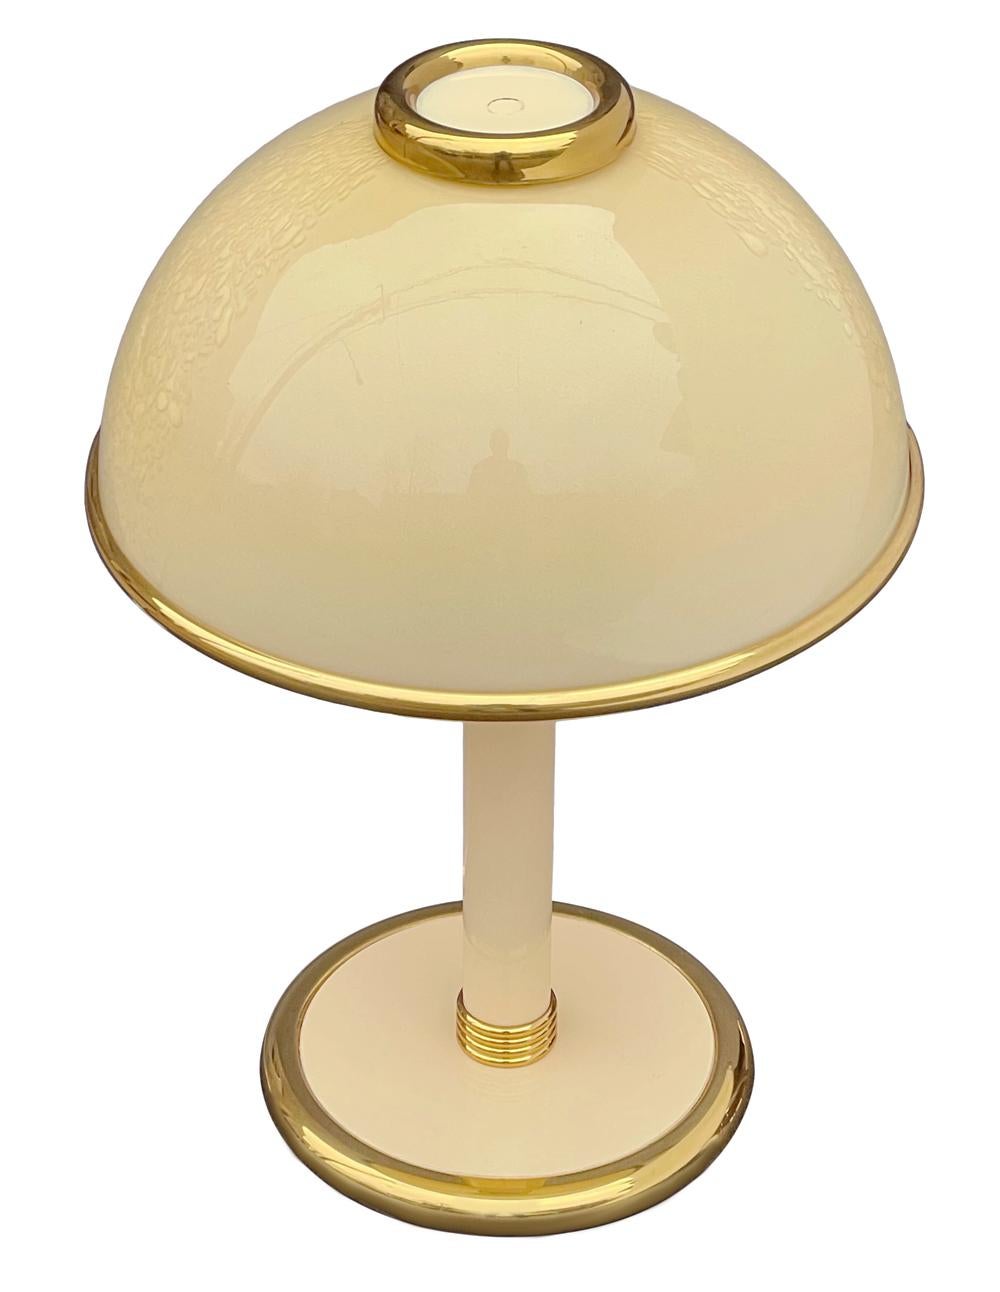 Late 20th Century Mid-Century Italian Modern Art Glass Mushroom Table Lamp by Mazzega with Brass